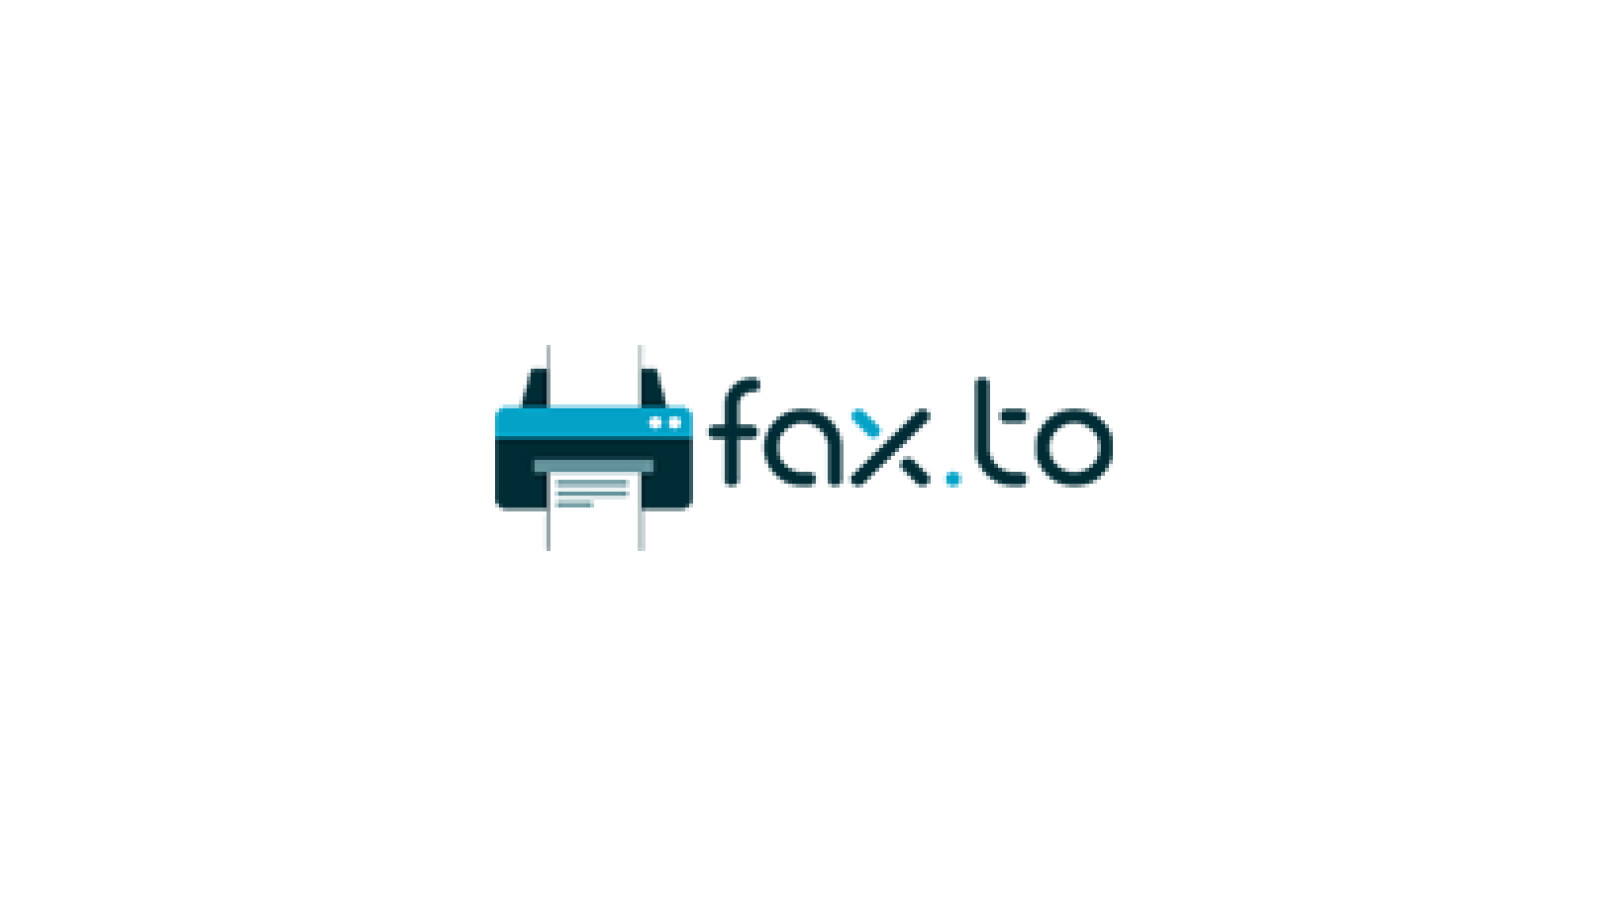 international fax similar to pamfax